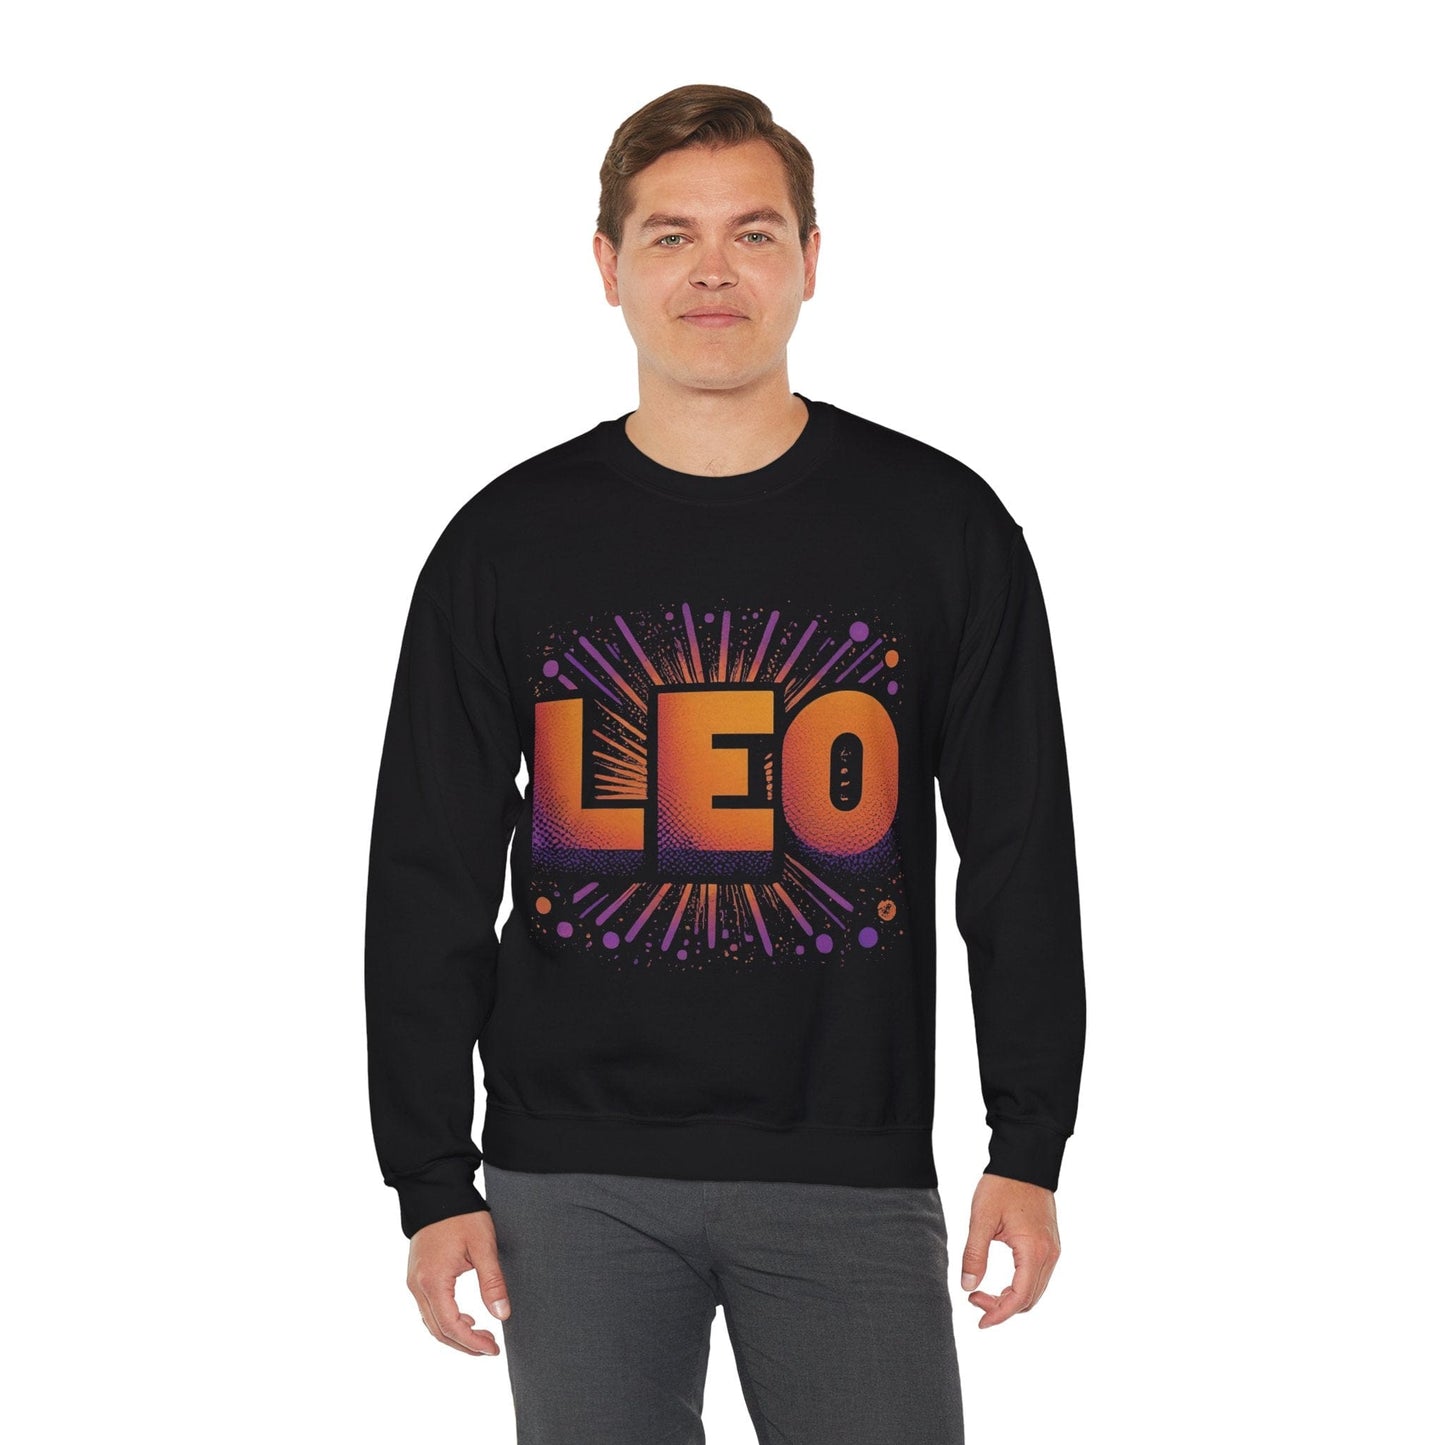 Sweatshirt Classic 70s Neon Leo